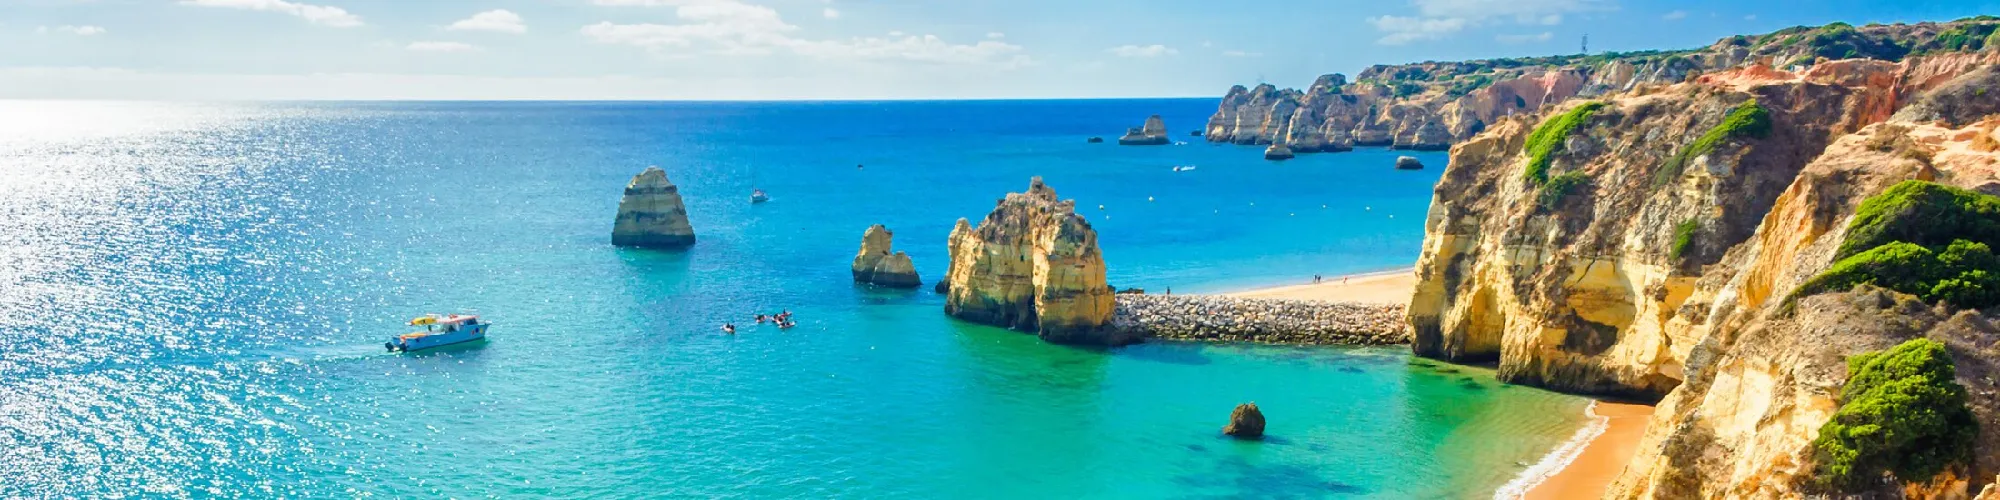 Urlaub in Portugal background image